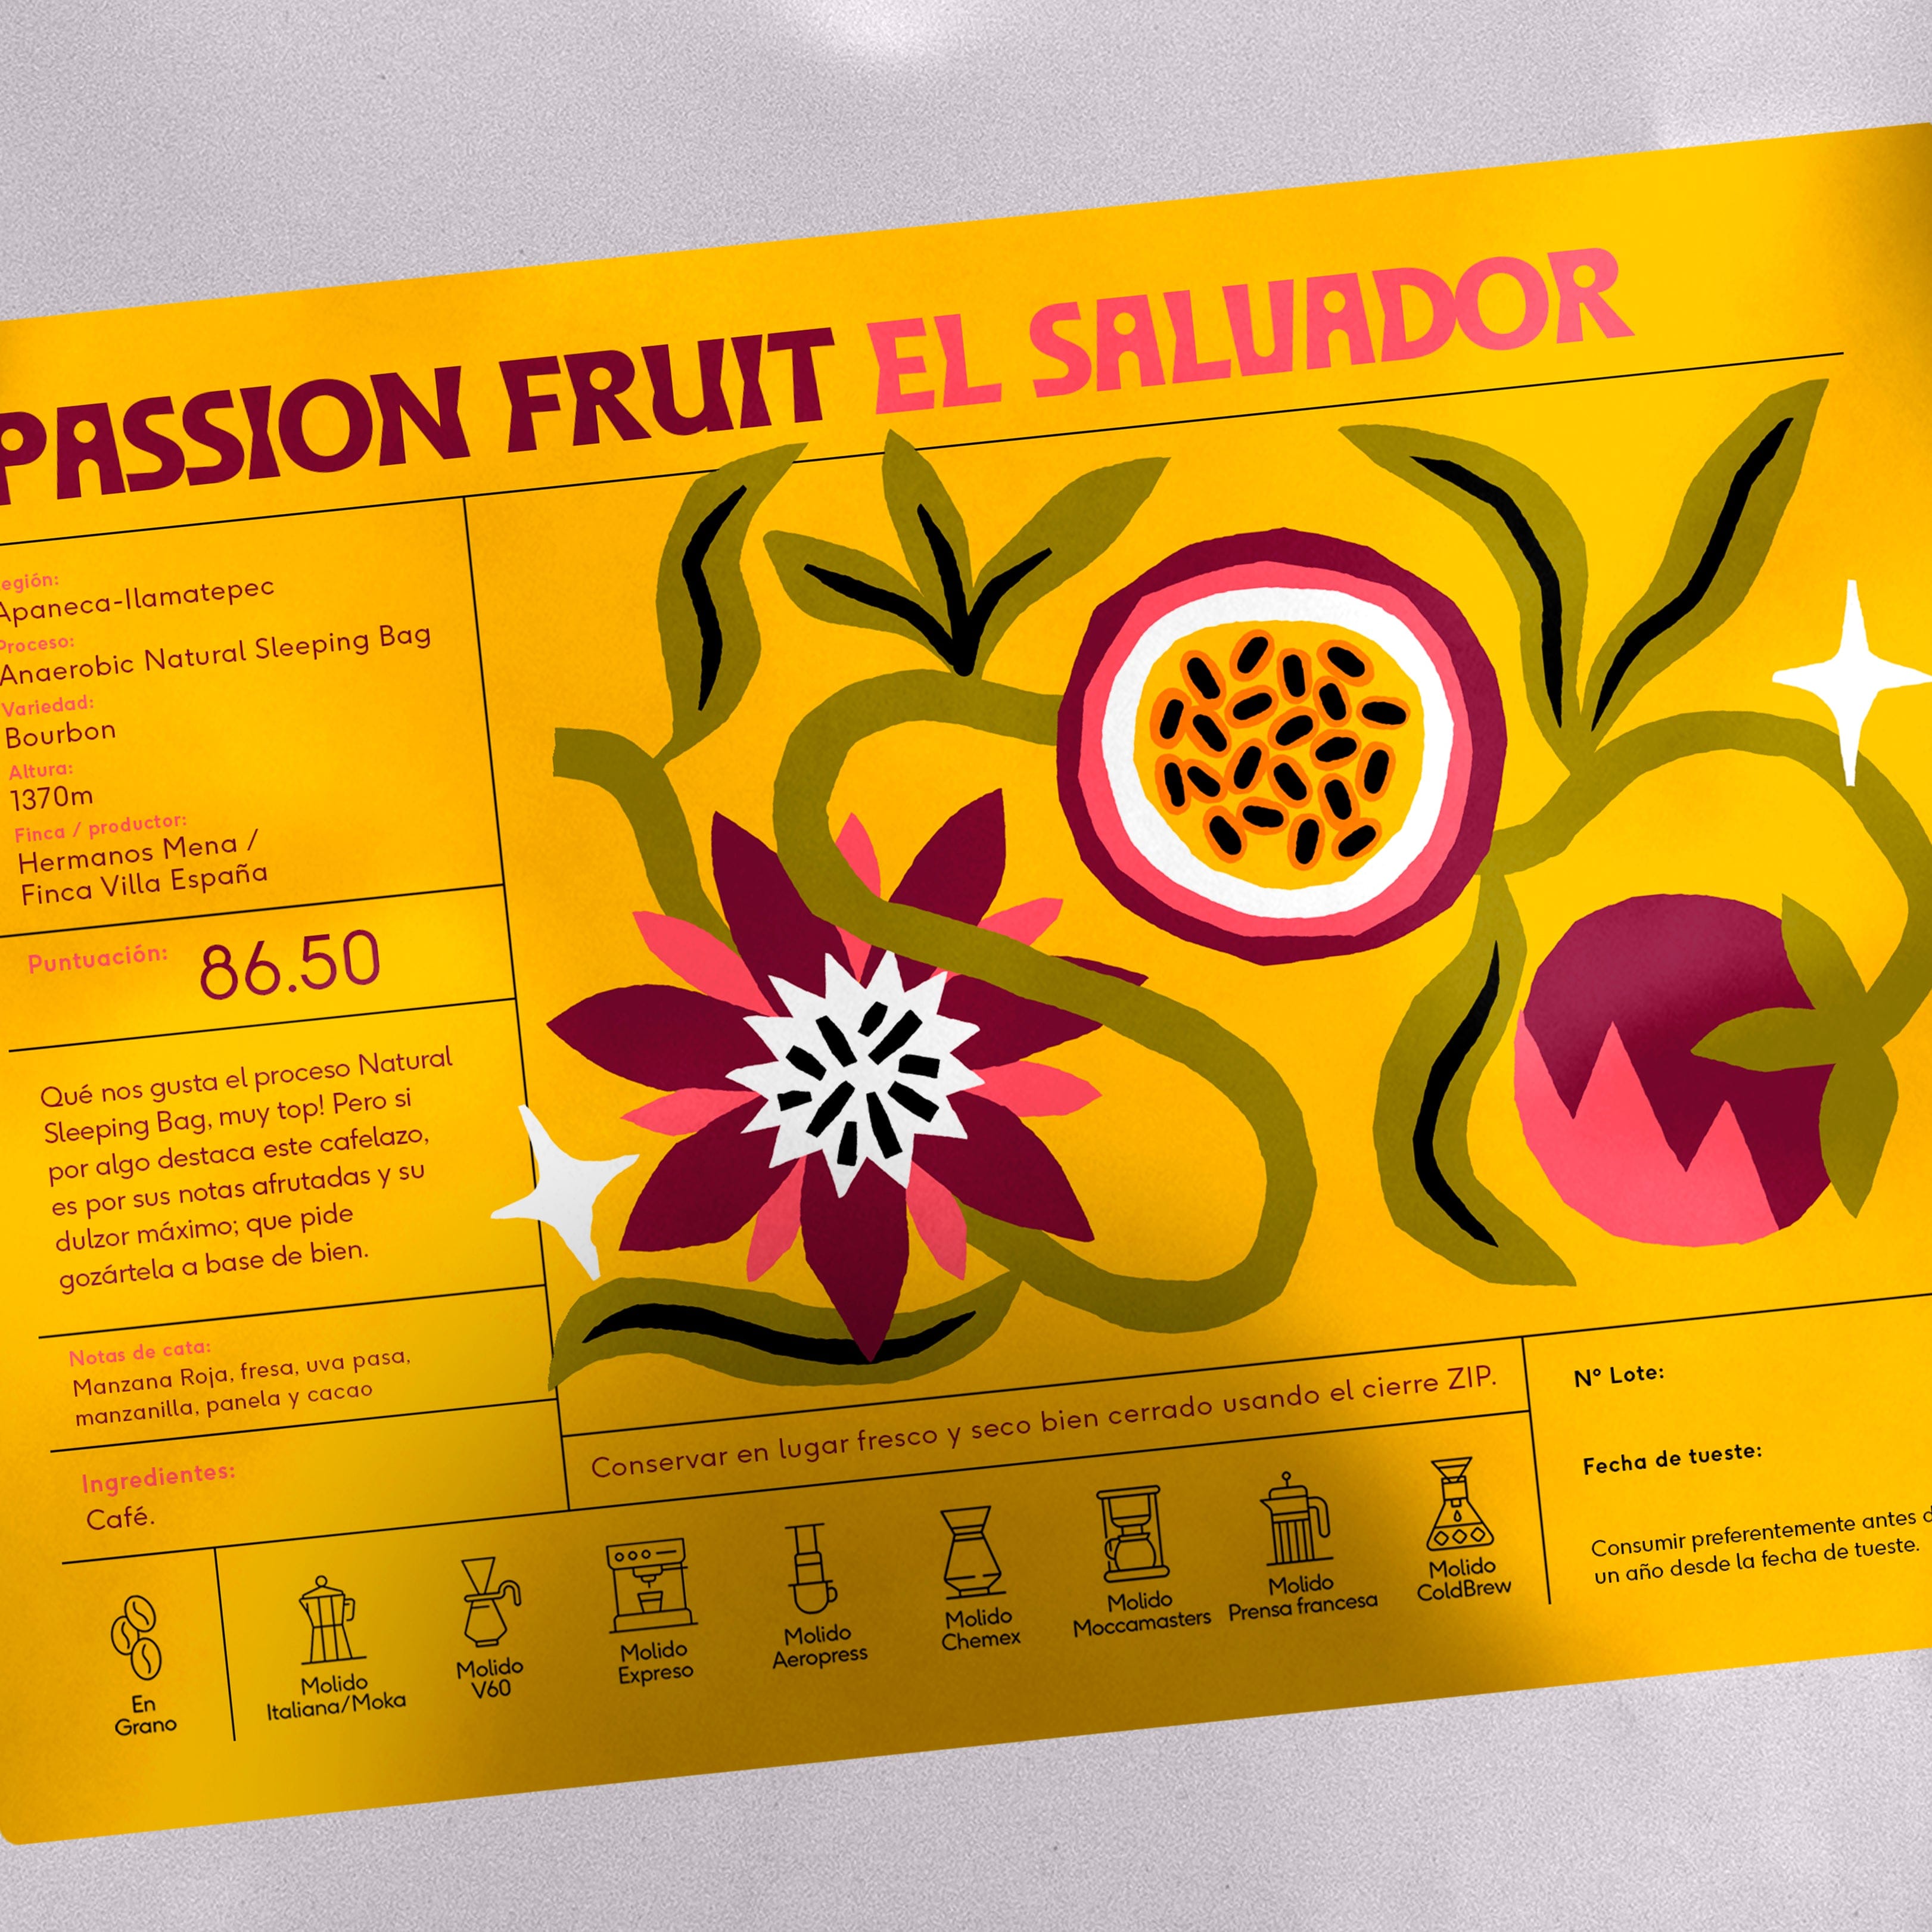 Passion Fruit de El Salvador